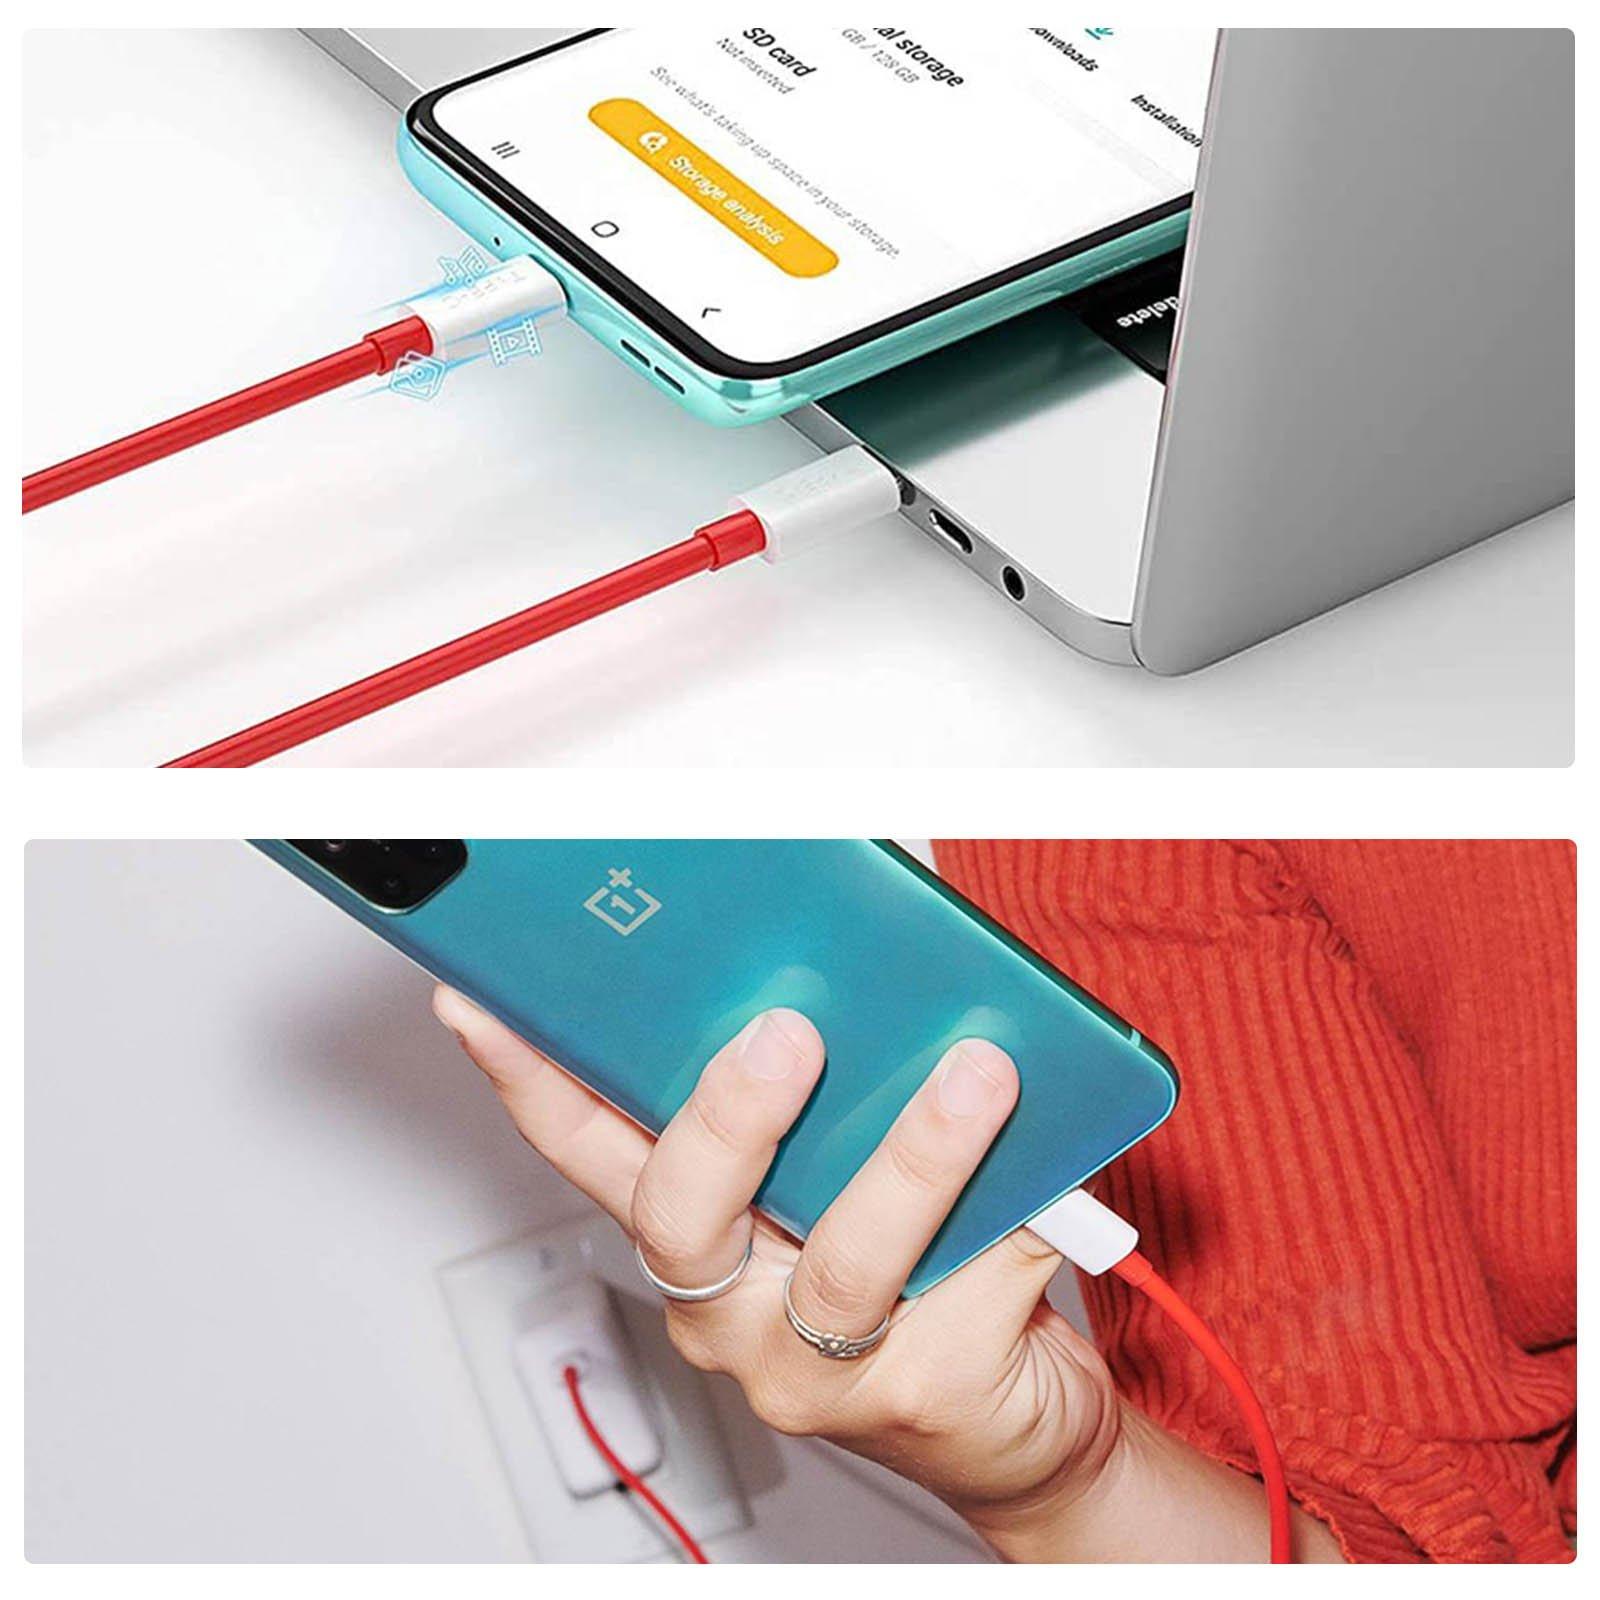 OnePlus  OnePlus warp charge USB-C 6.5A Kabel 1m 